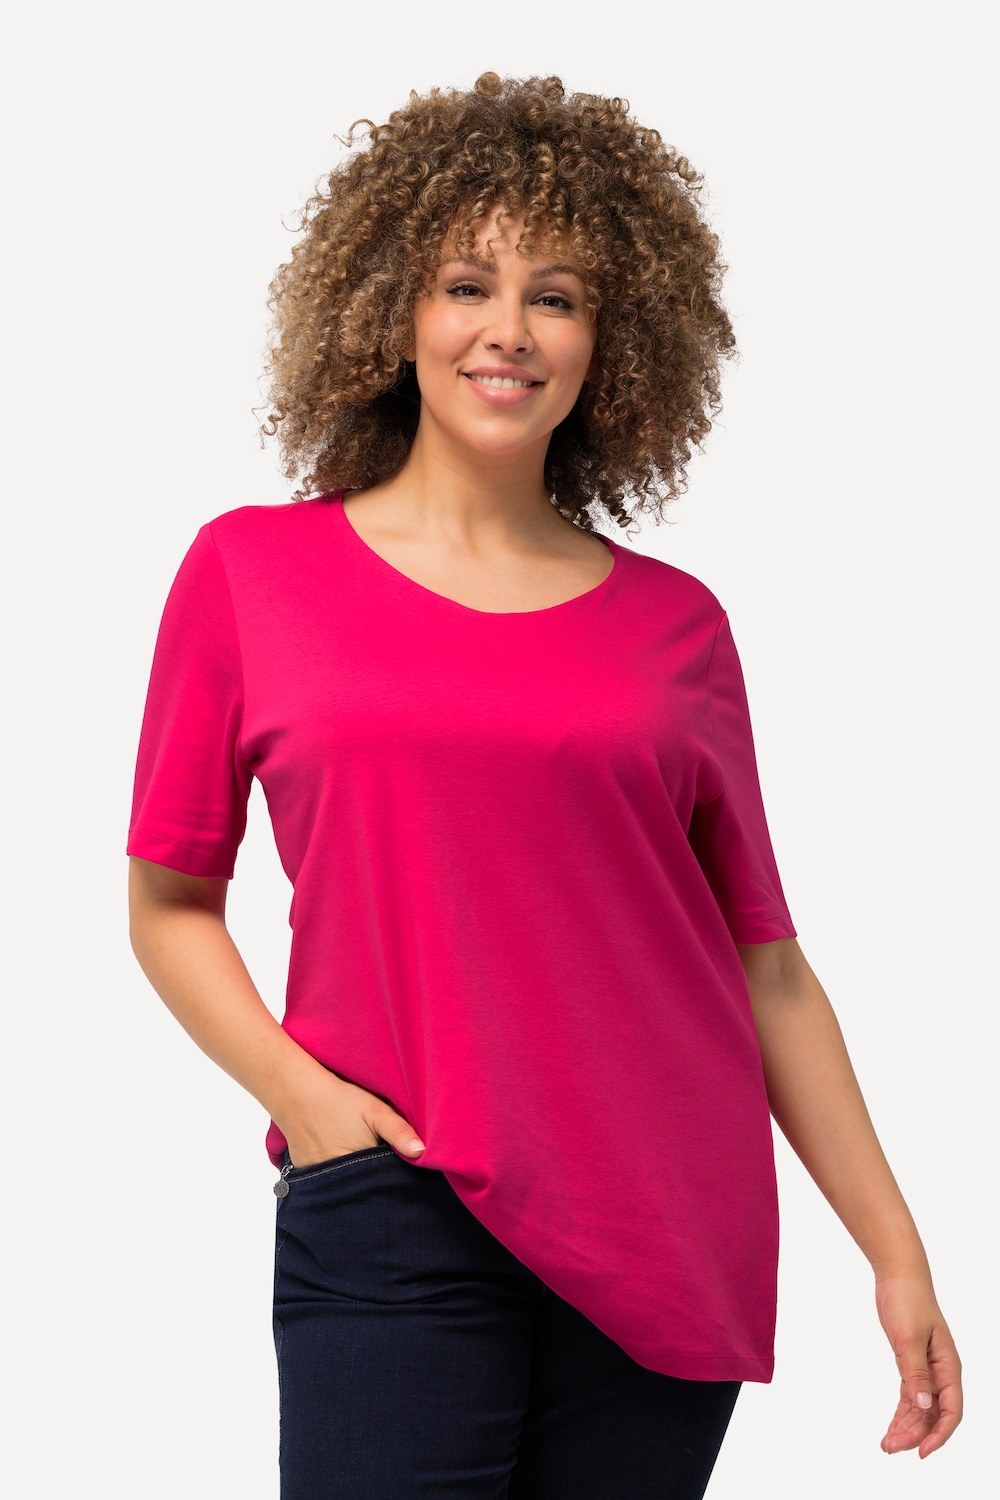 Große Größen Shirt, Damen, rosa, Größe: 62/64, Baumwolle, Ulla Popken